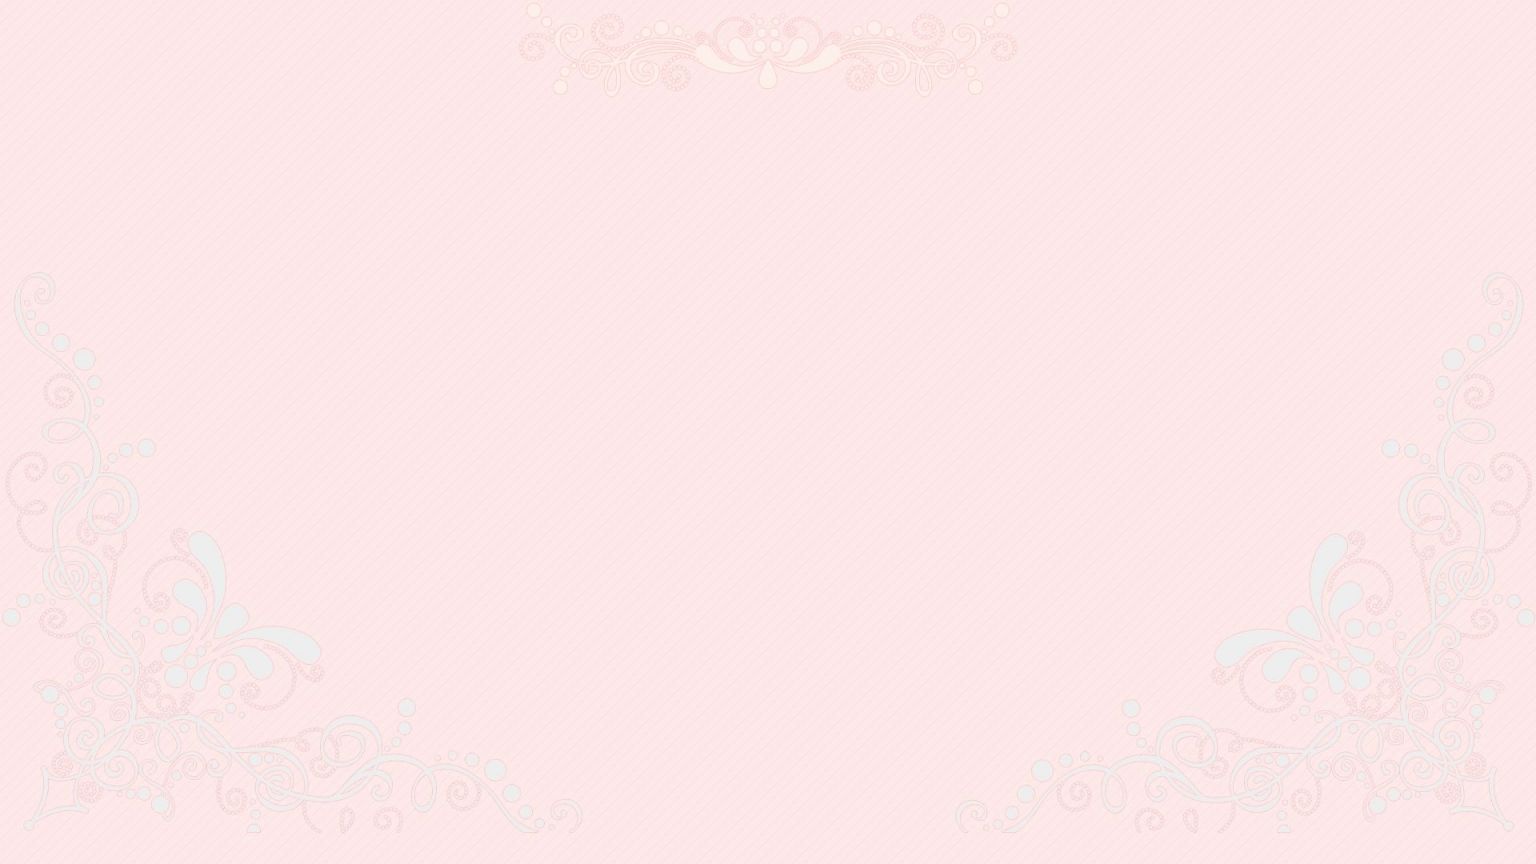 Pastel Pink Anime Wallpapers